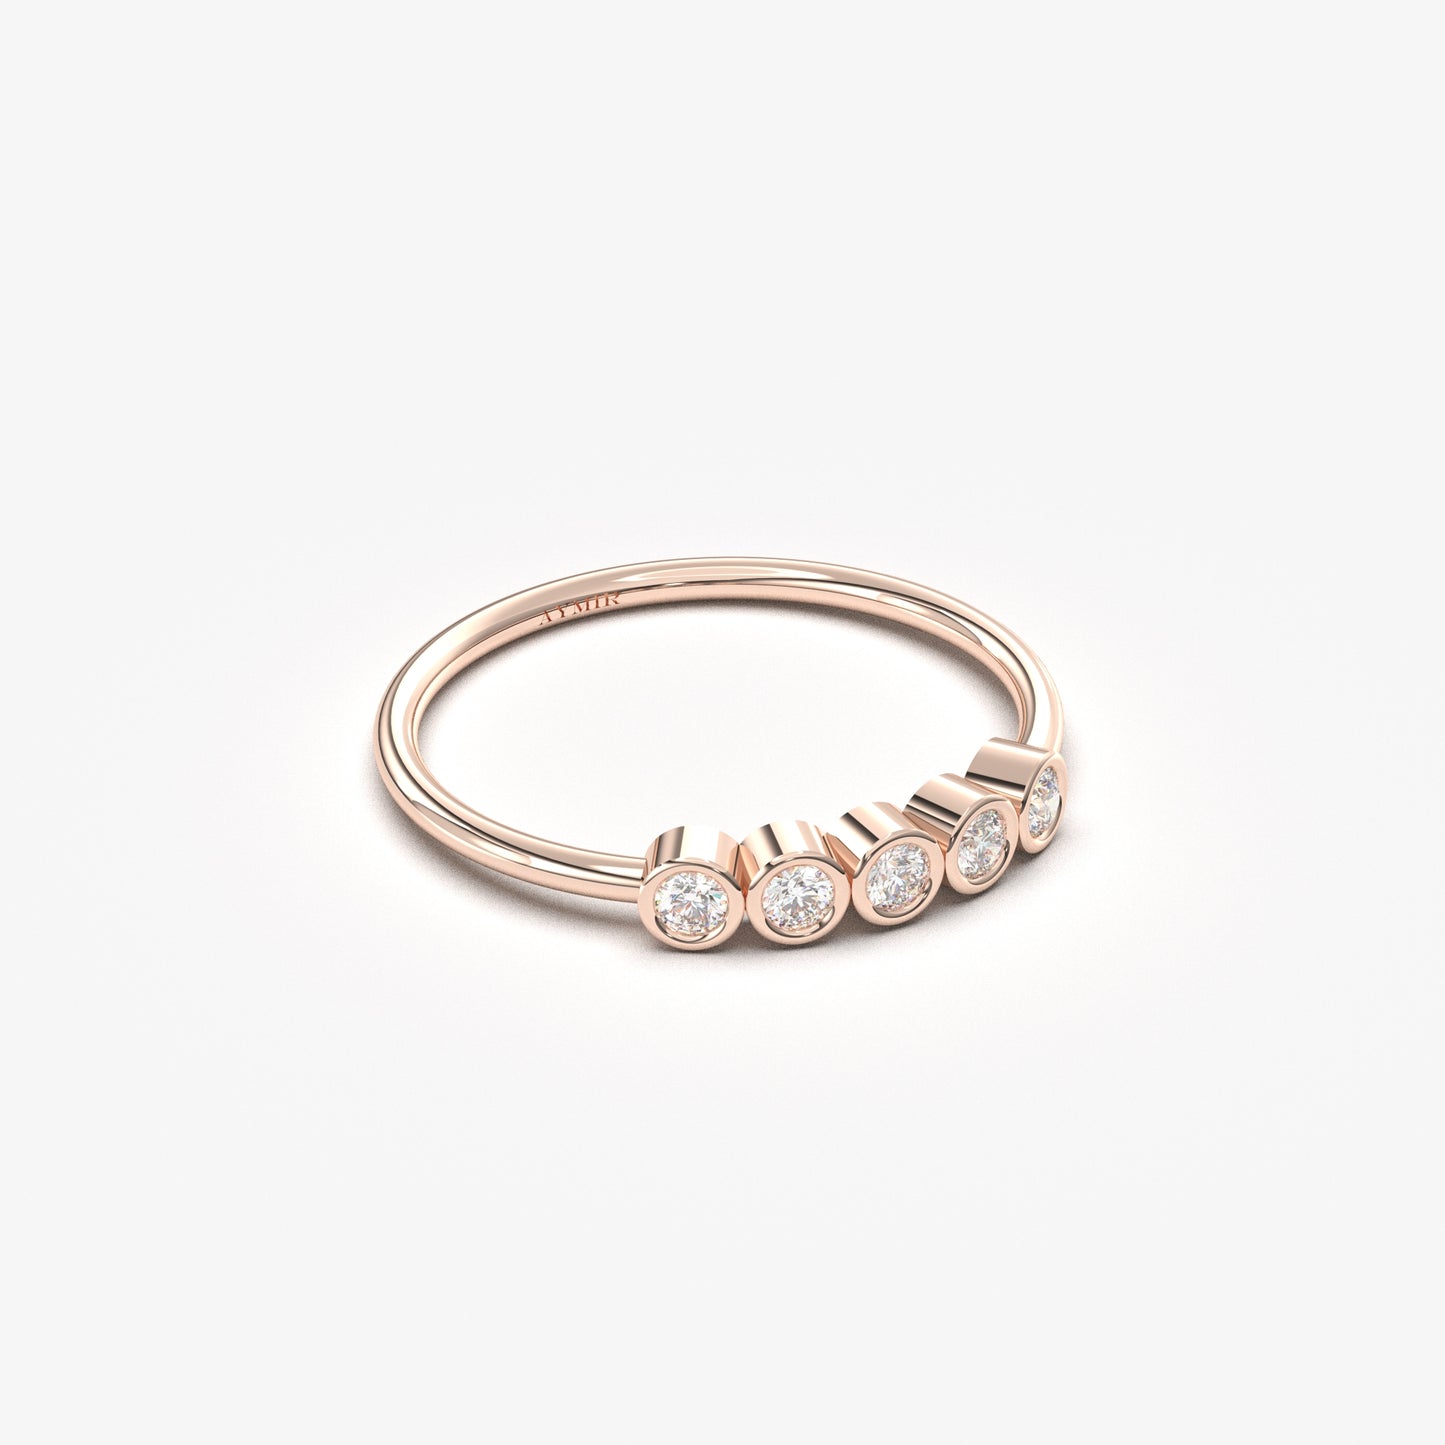 18K Gold Five Stone Diamond Ring - 2S108